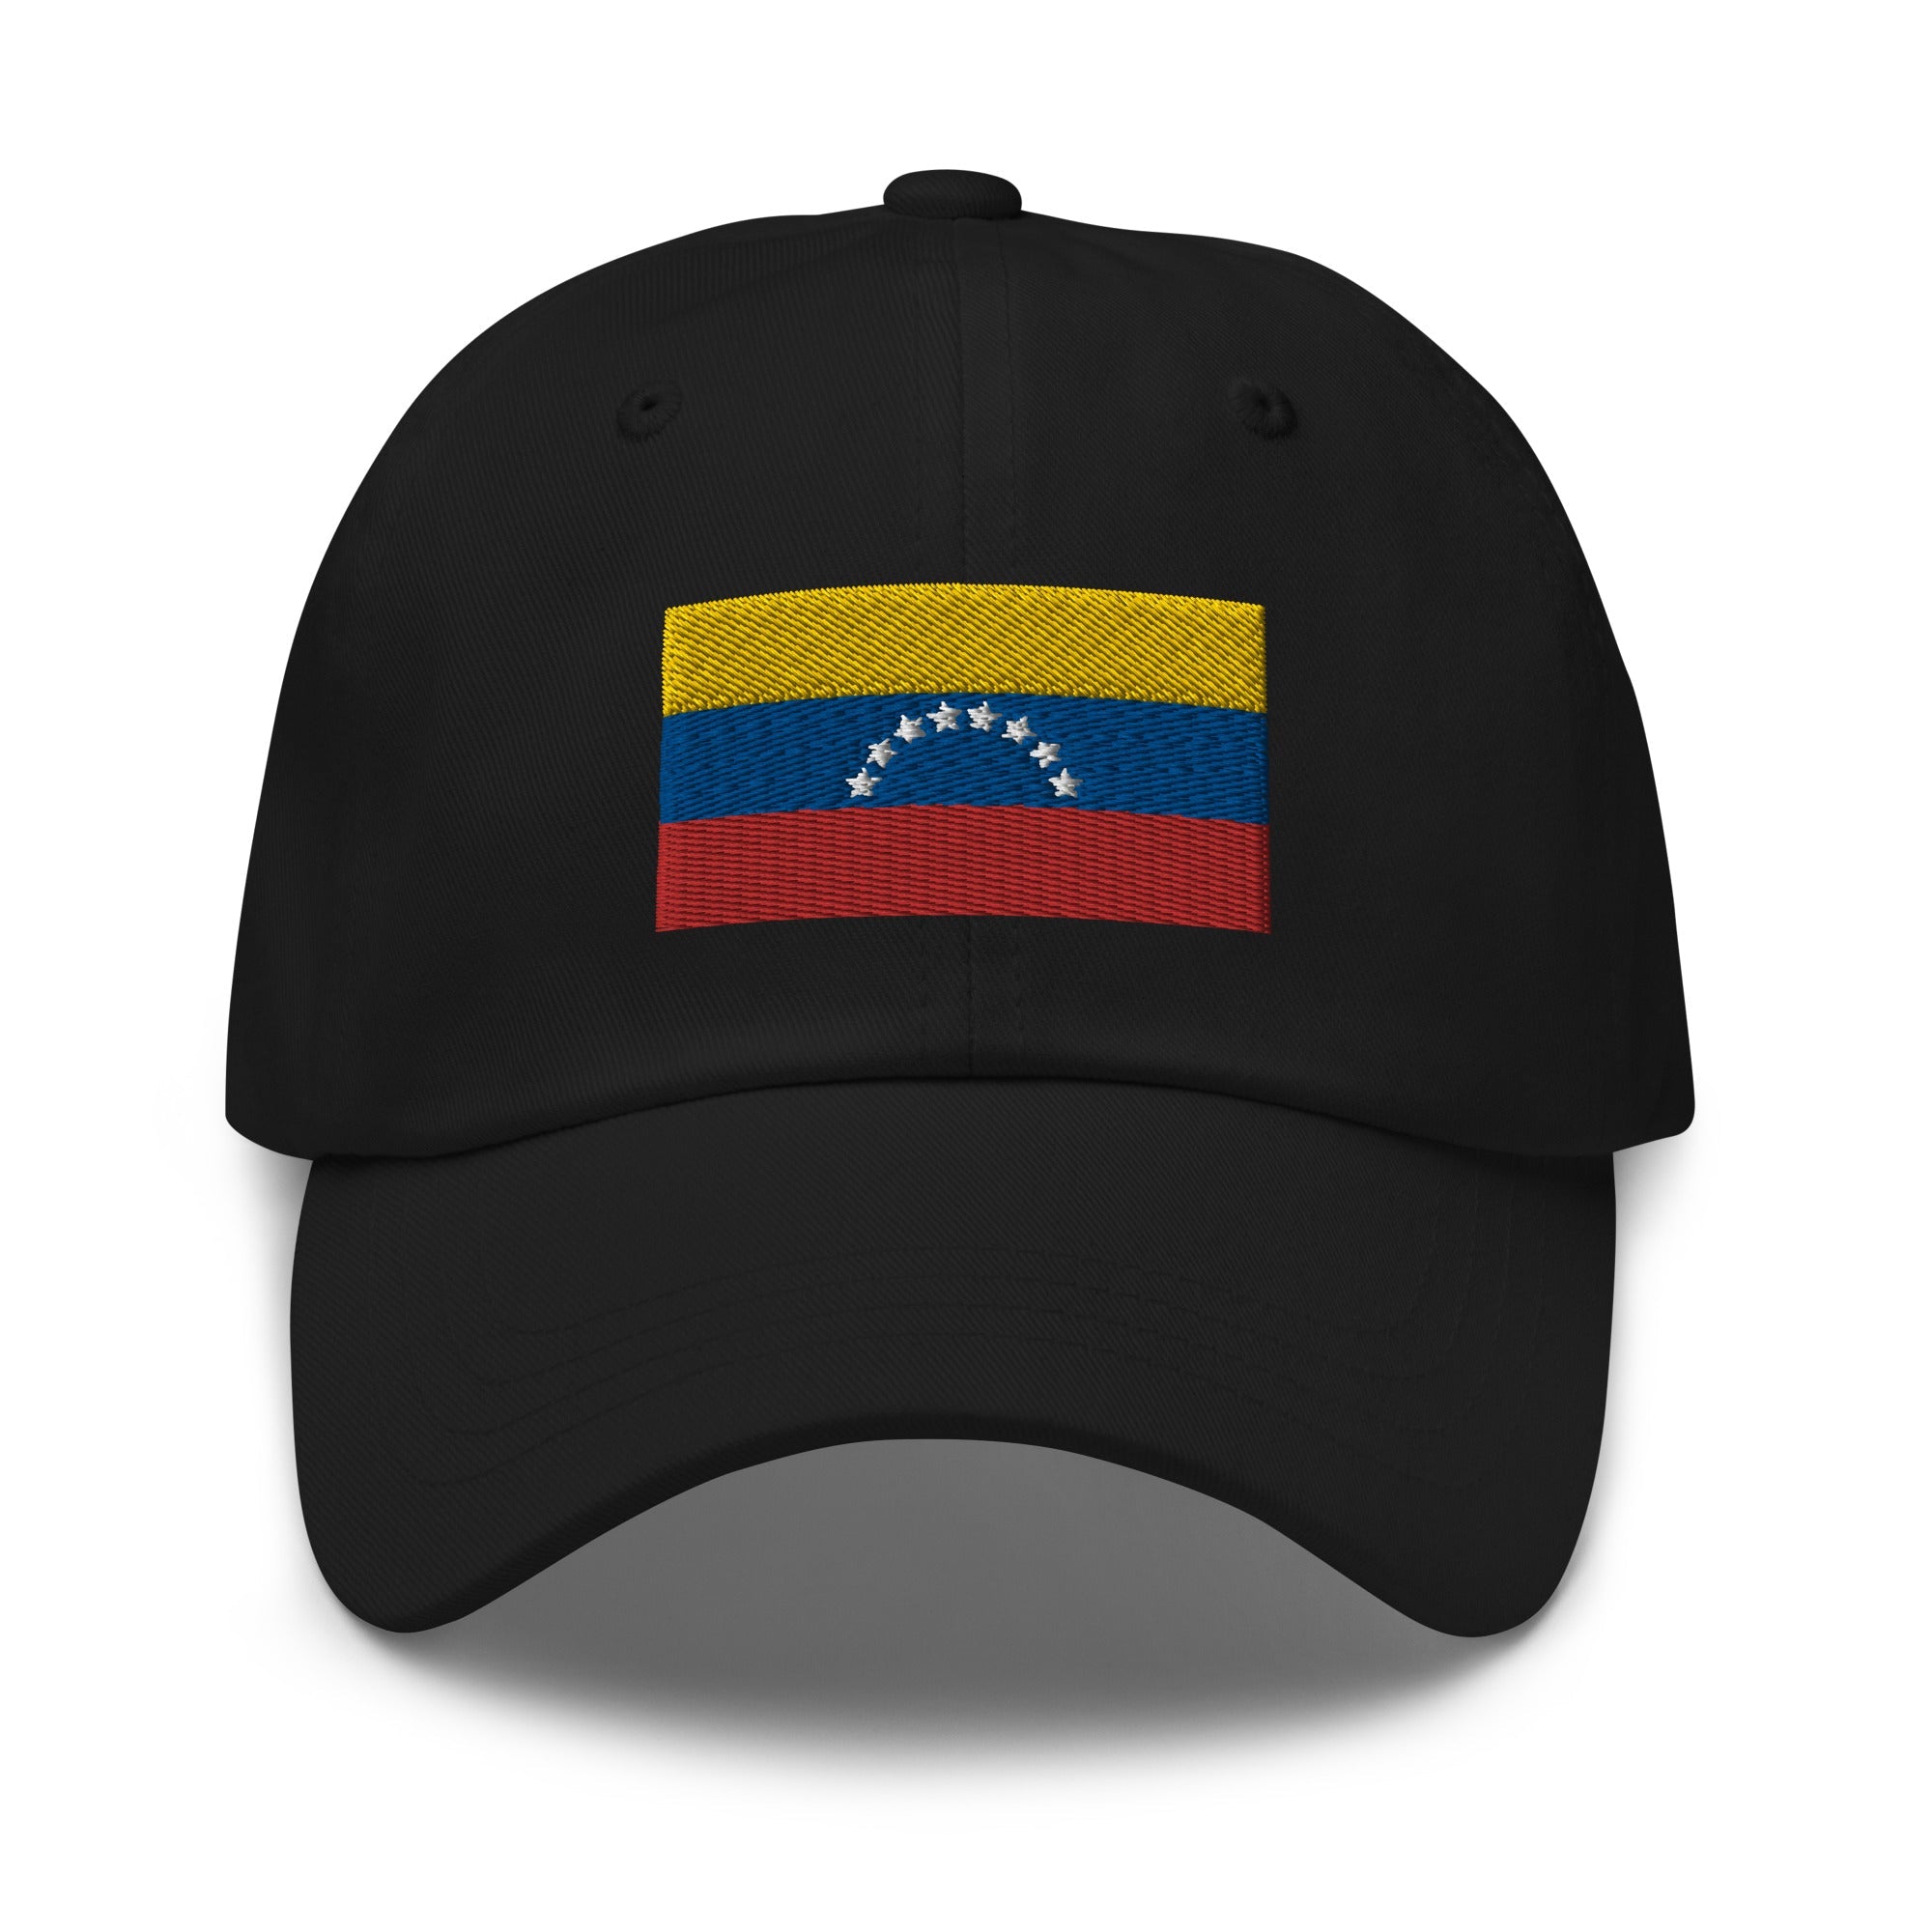 Venezuela Flag Cap - Adjustable Embroidered Dad Hat